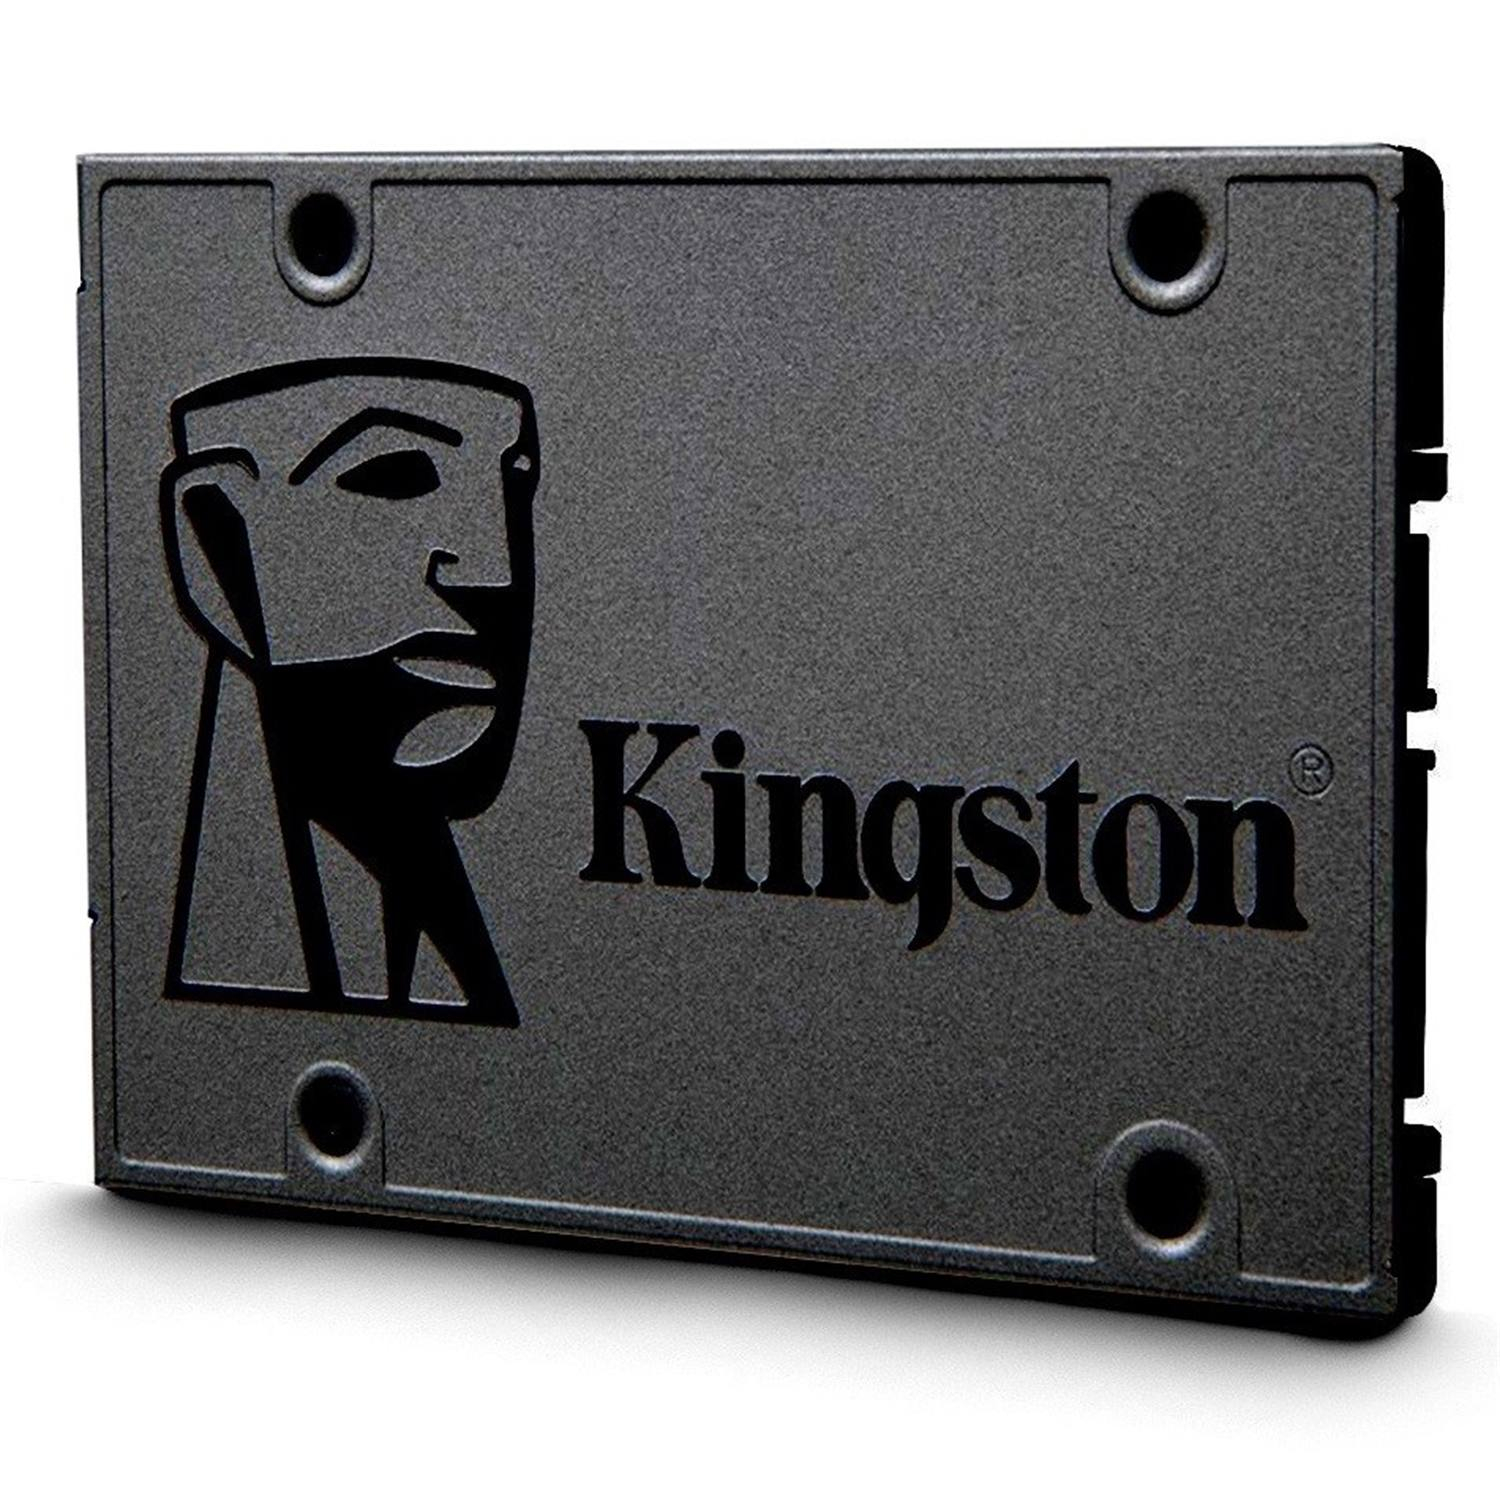 Unidad de estado sólido SSD Kingston A400 240GB 2.5 SATA3 7mm lect. 500 escr. 350Mbps